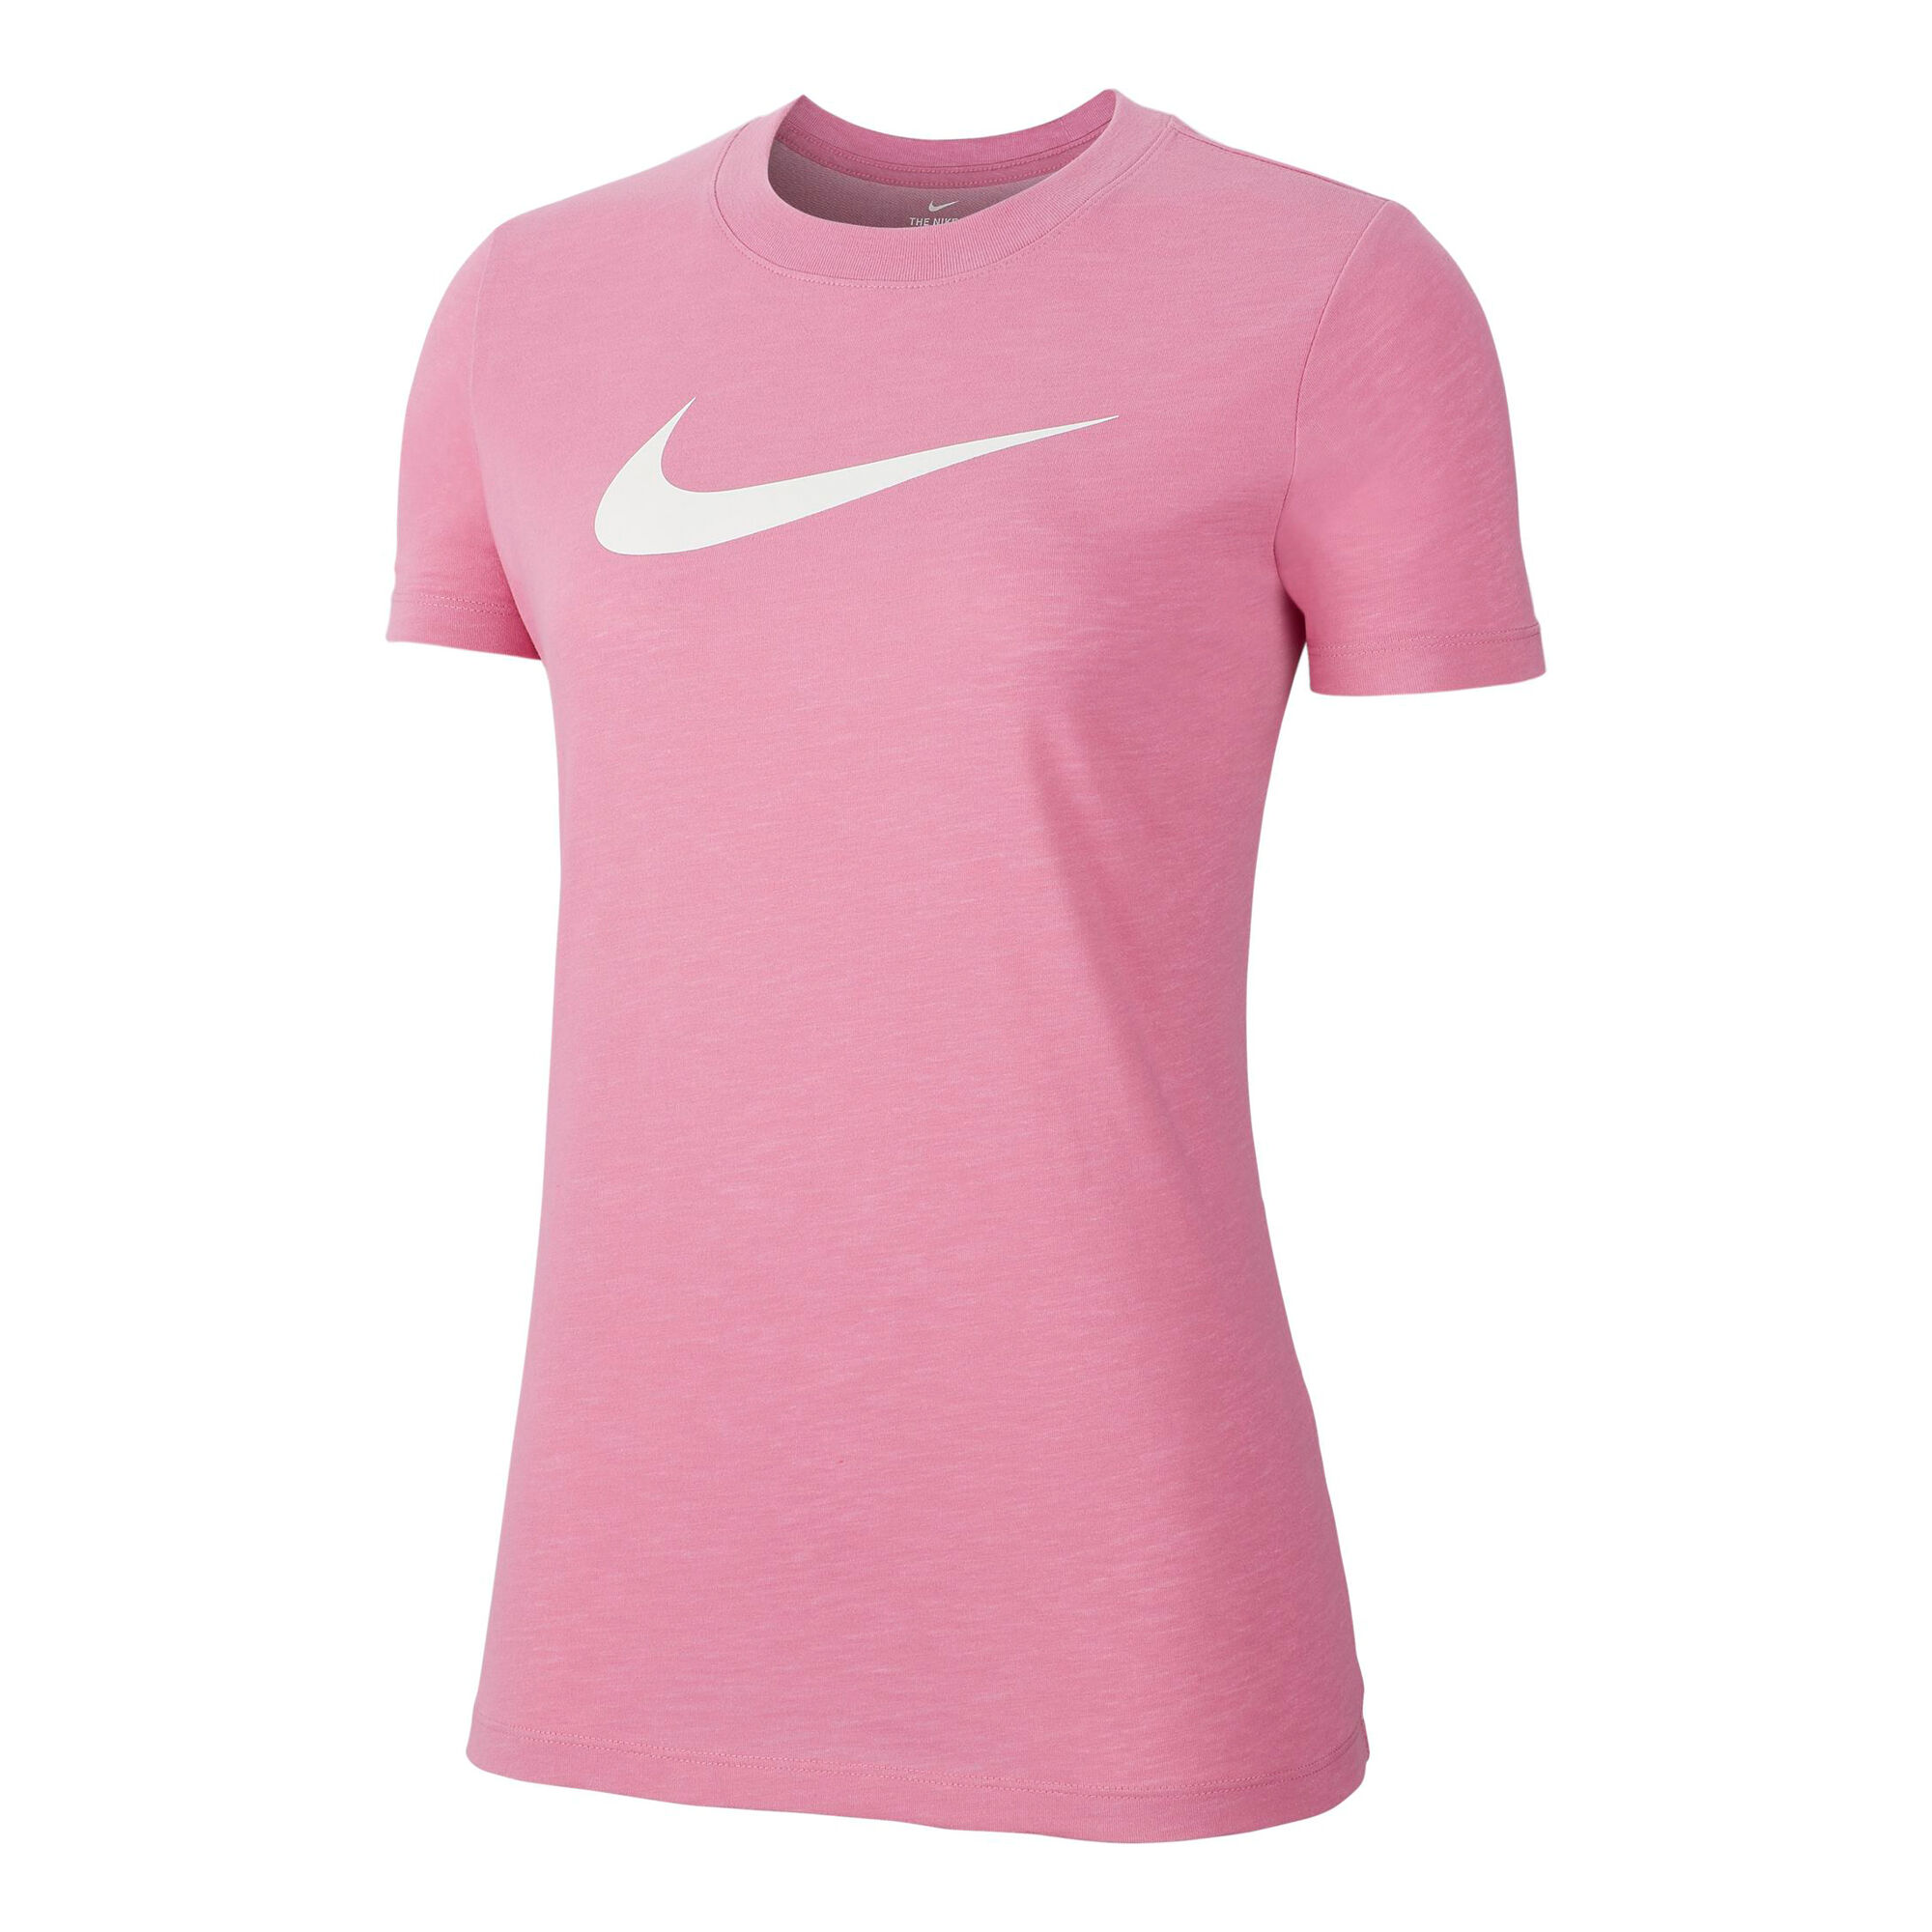 Nike Dry Camiseta De Manga Corta Mujeres - Rosa, Blanco compra online